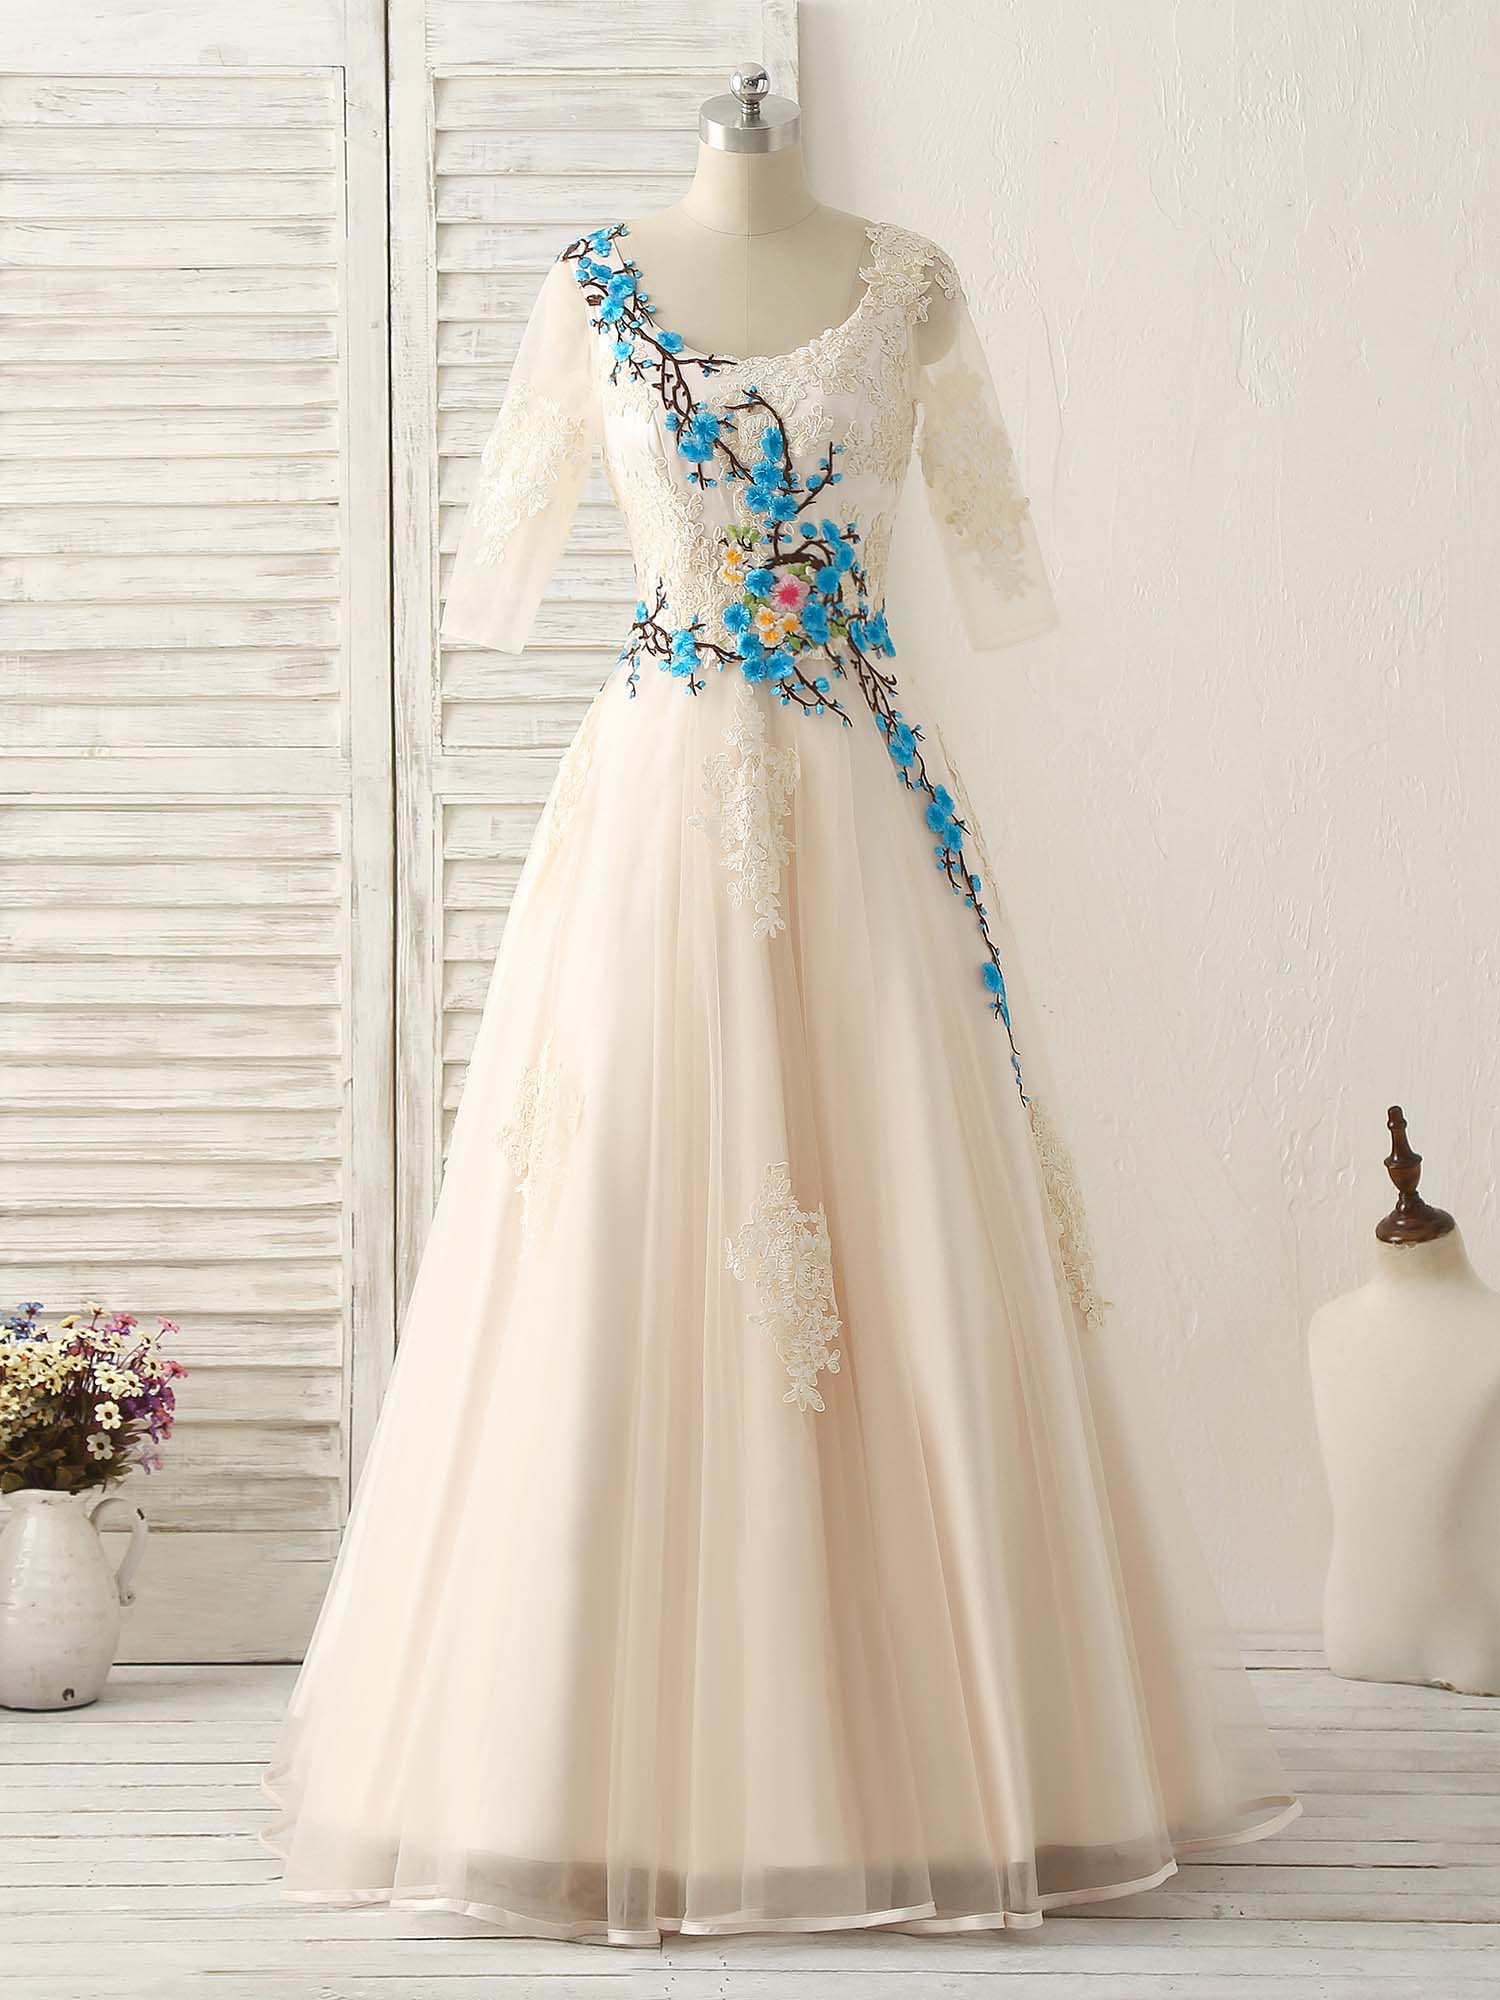 Classy Outfit Women, Unique Lace Applique Tulle Long Prom Dress Light Champagne Bridesmaid Dress